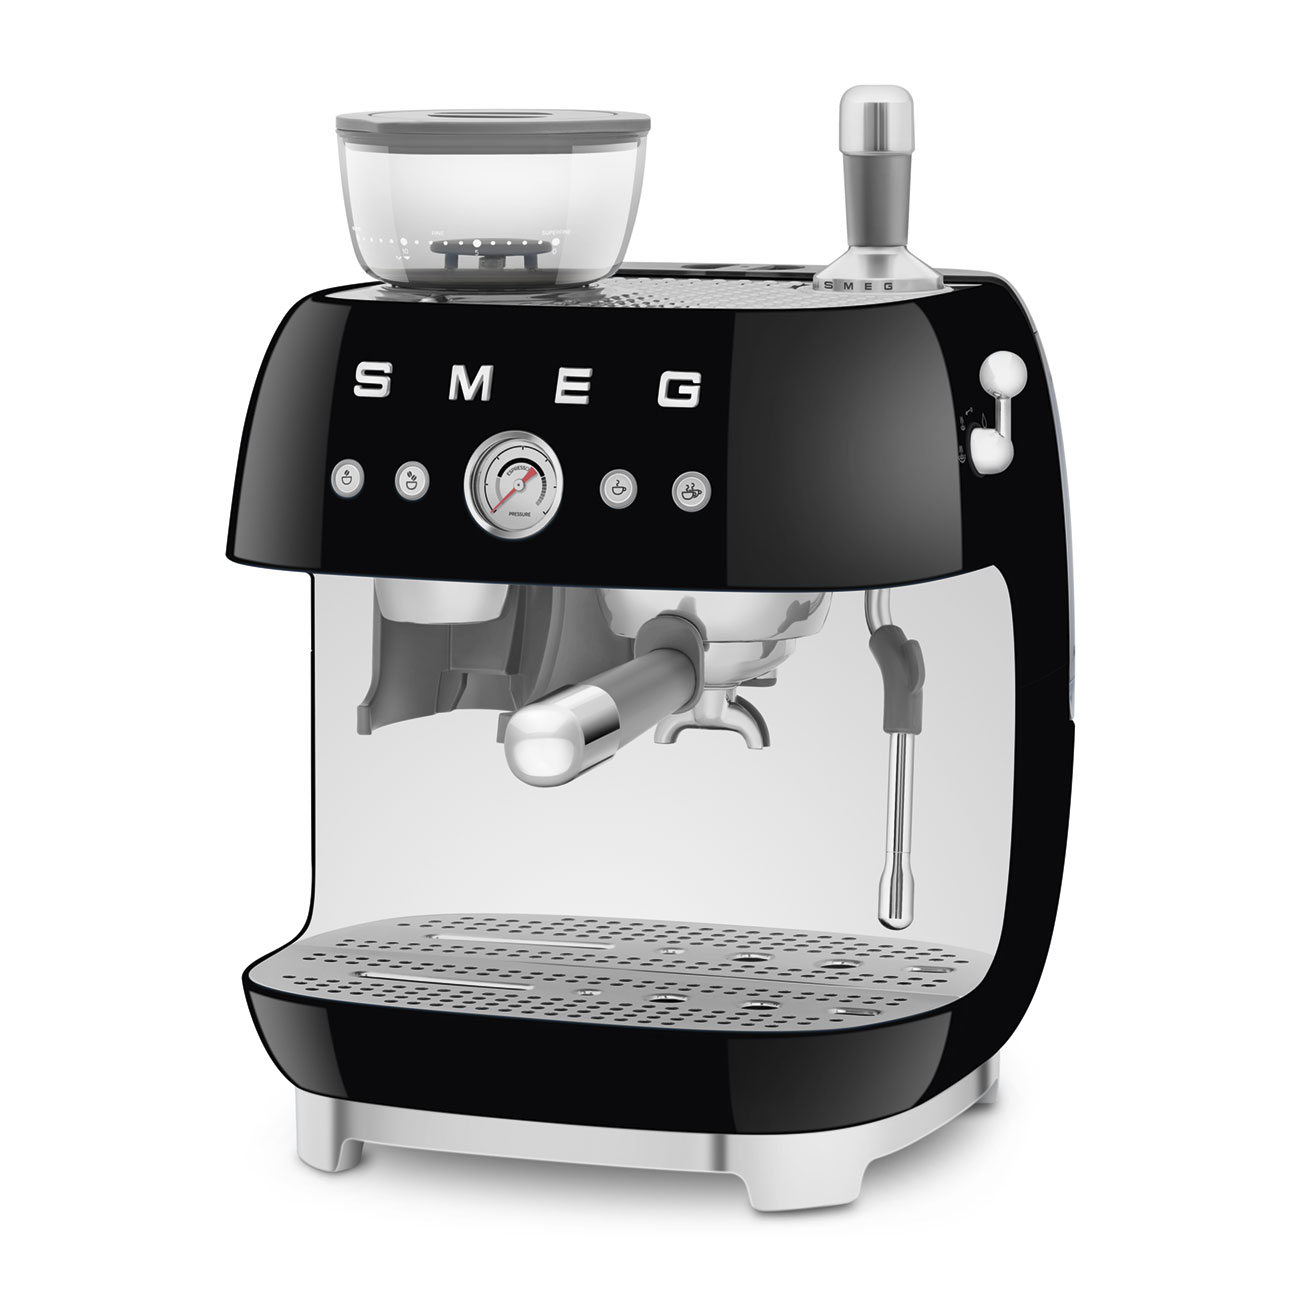 Smeg Black Espresso Manual Coffee Machine with Grinder_4